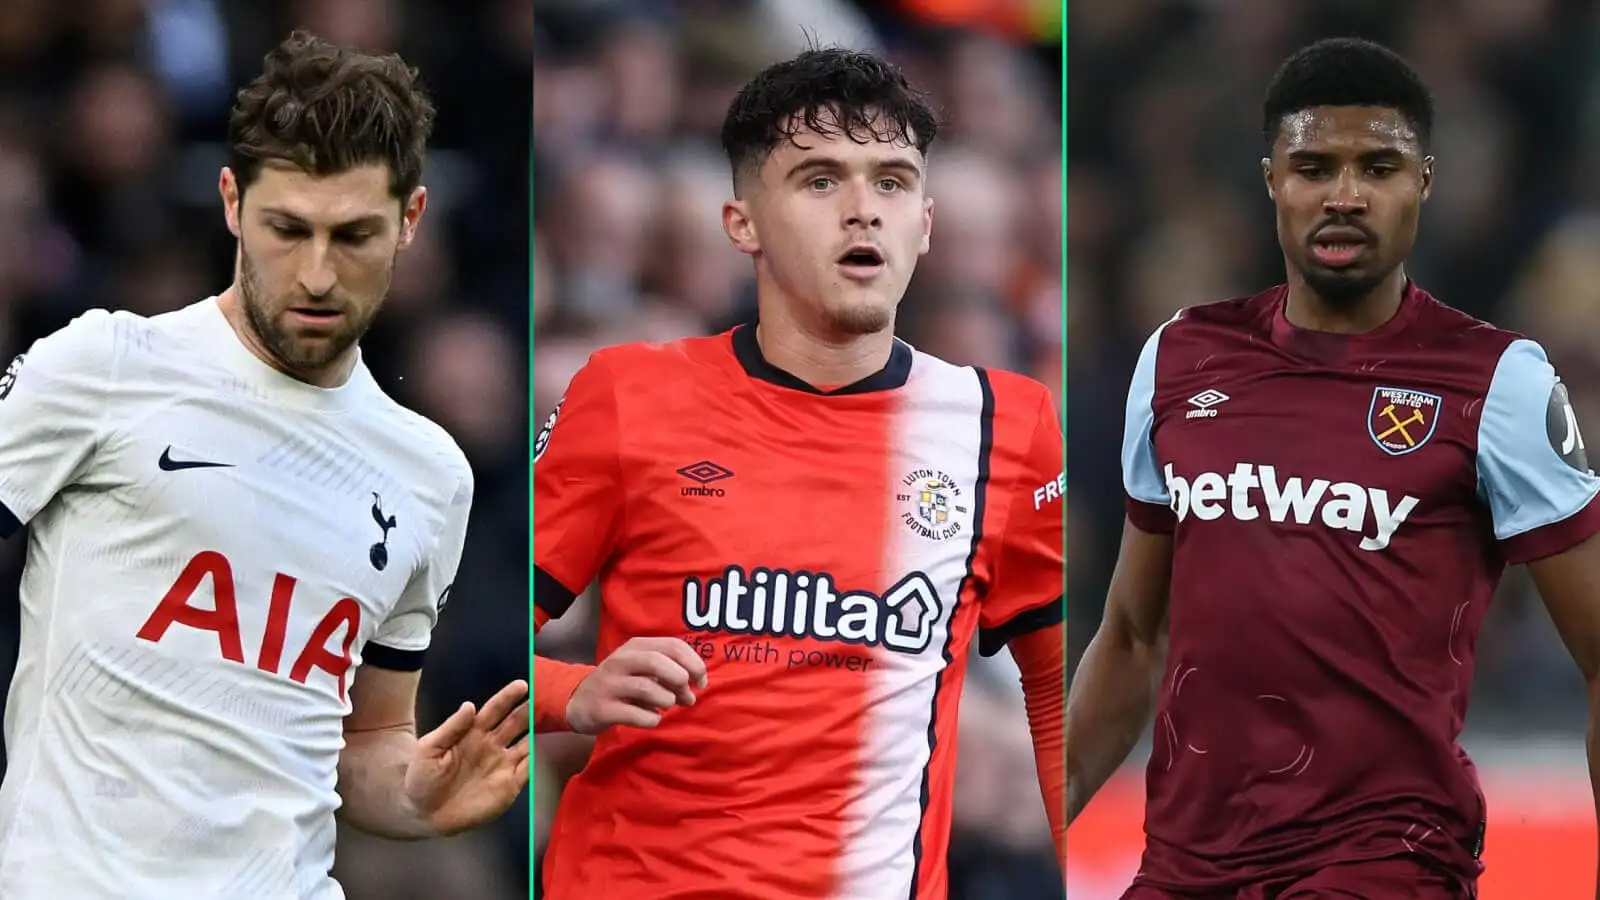 Tottenham's Ben Davies, Ryan Giles of Luton and West Ham's Ben Johnson are on Leeds United's transfer radar